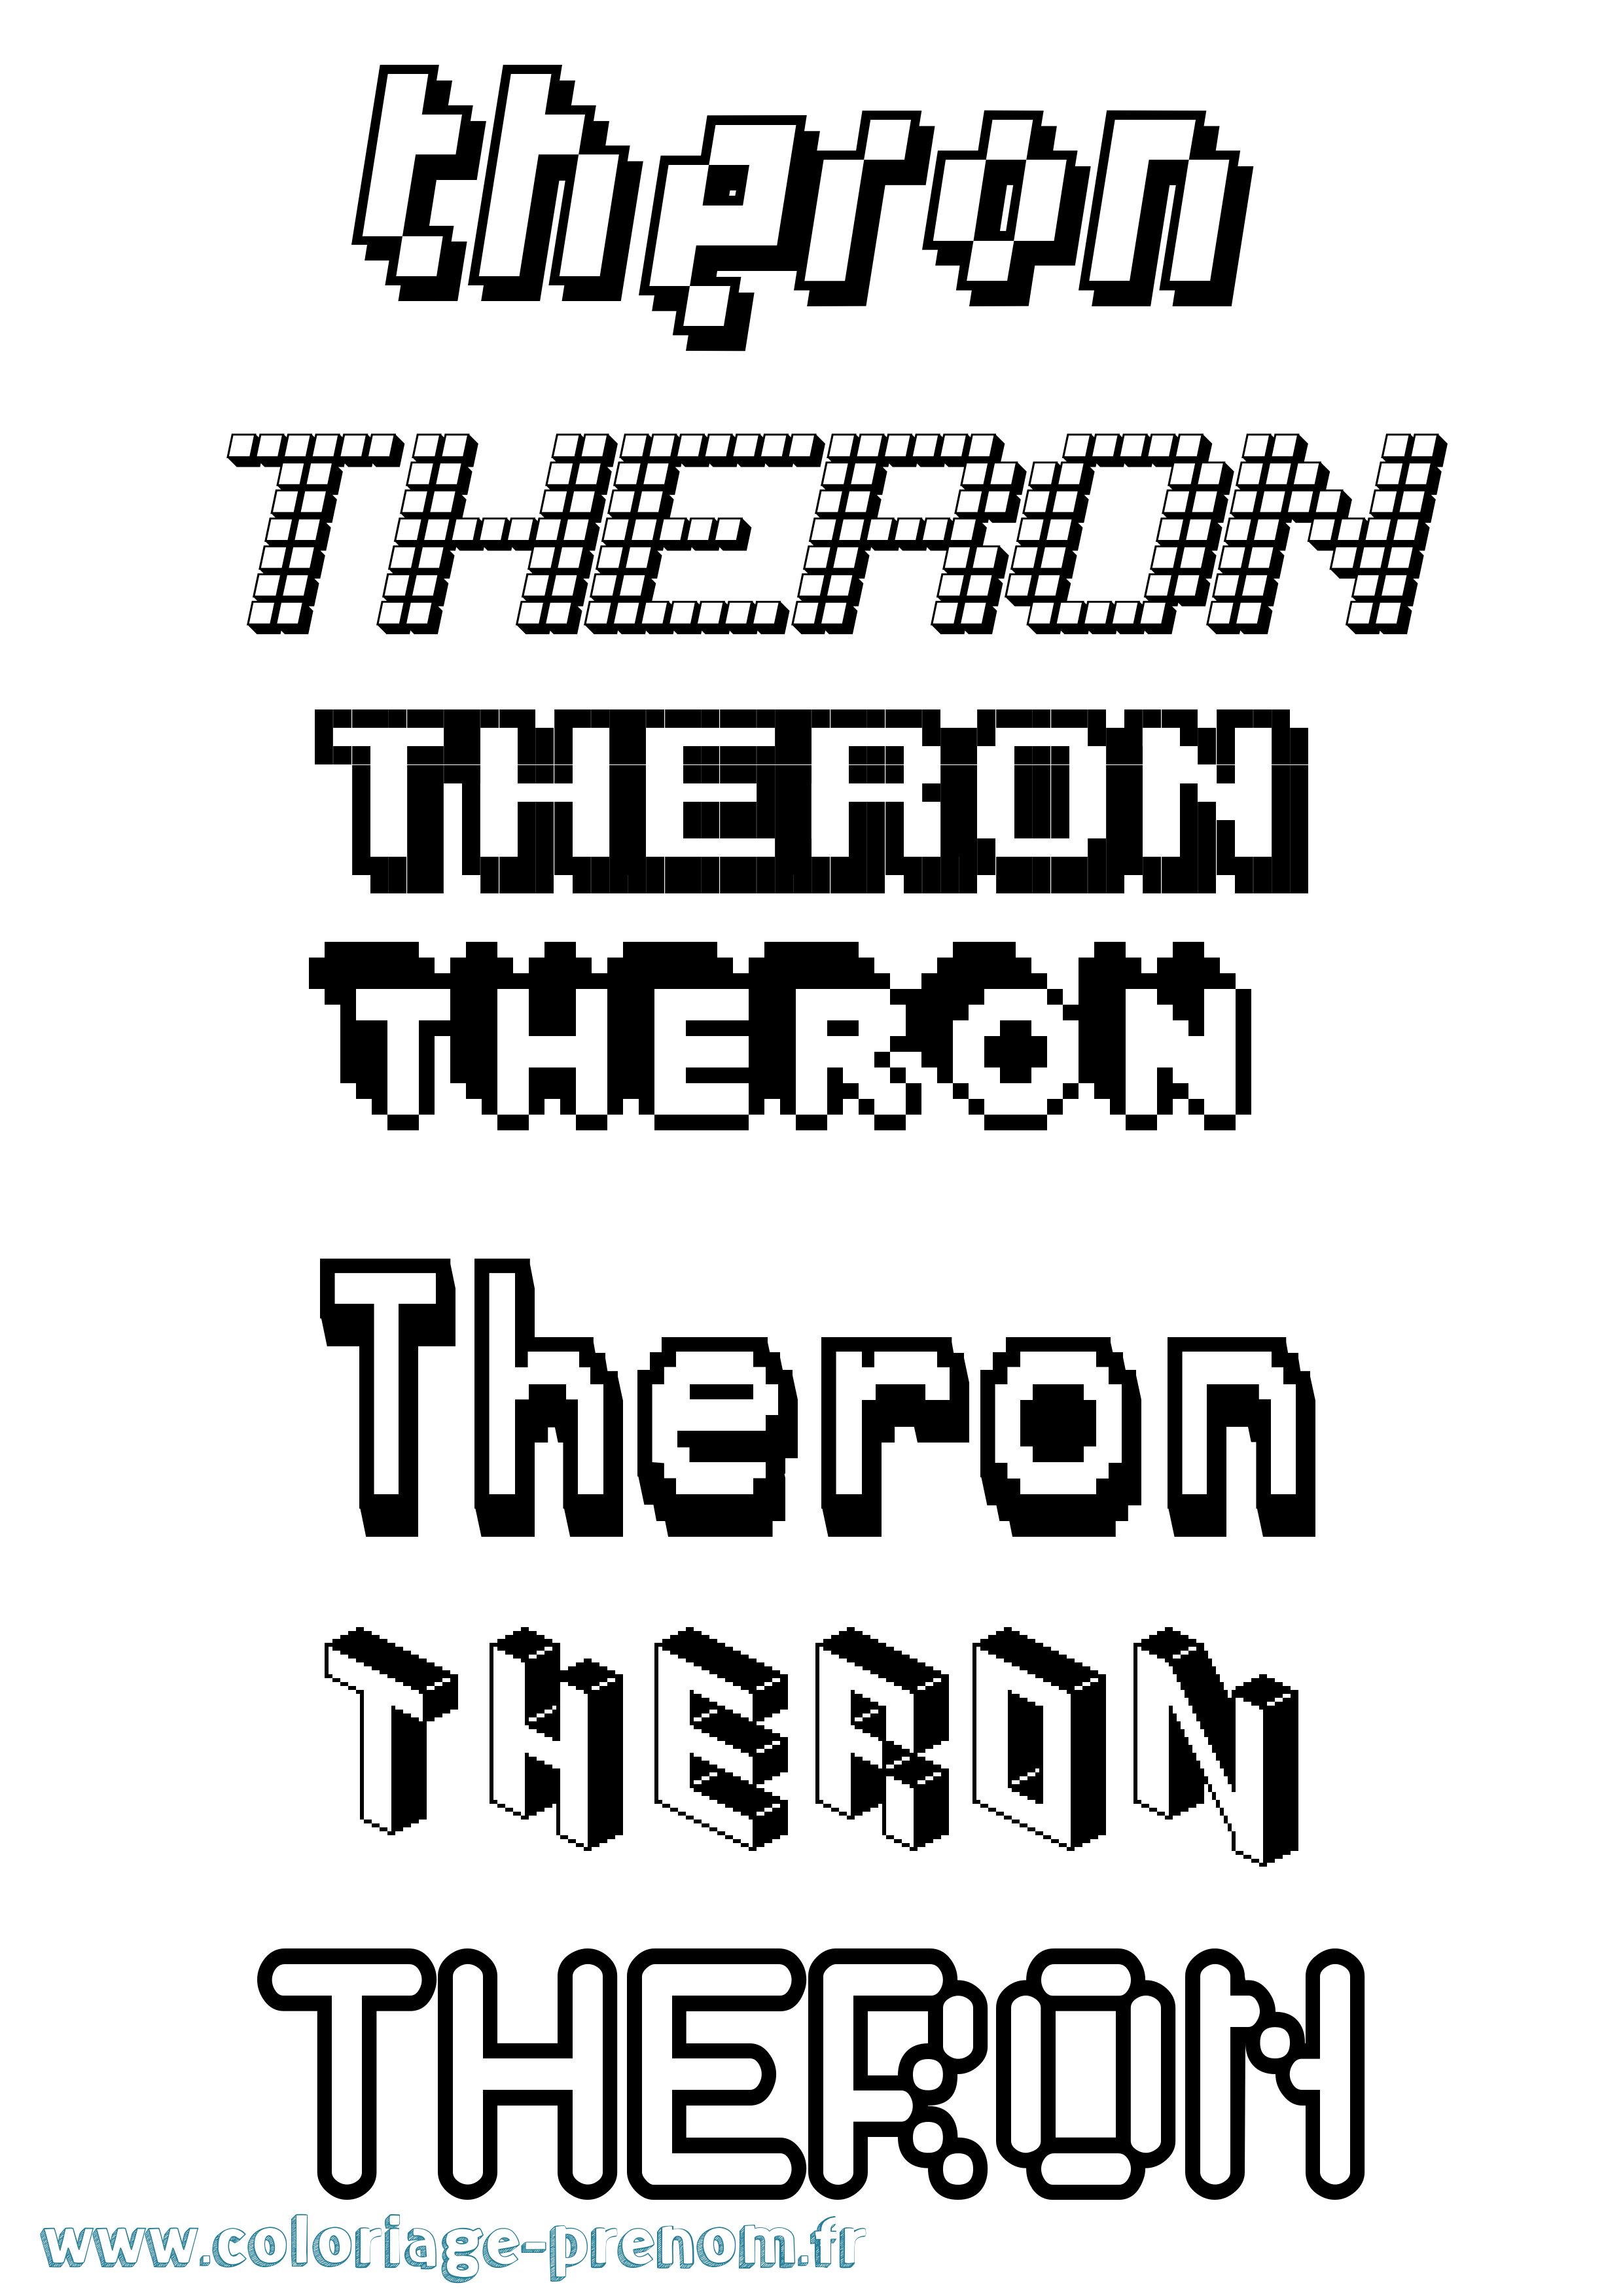 Coloriage prénom Theron Pixel